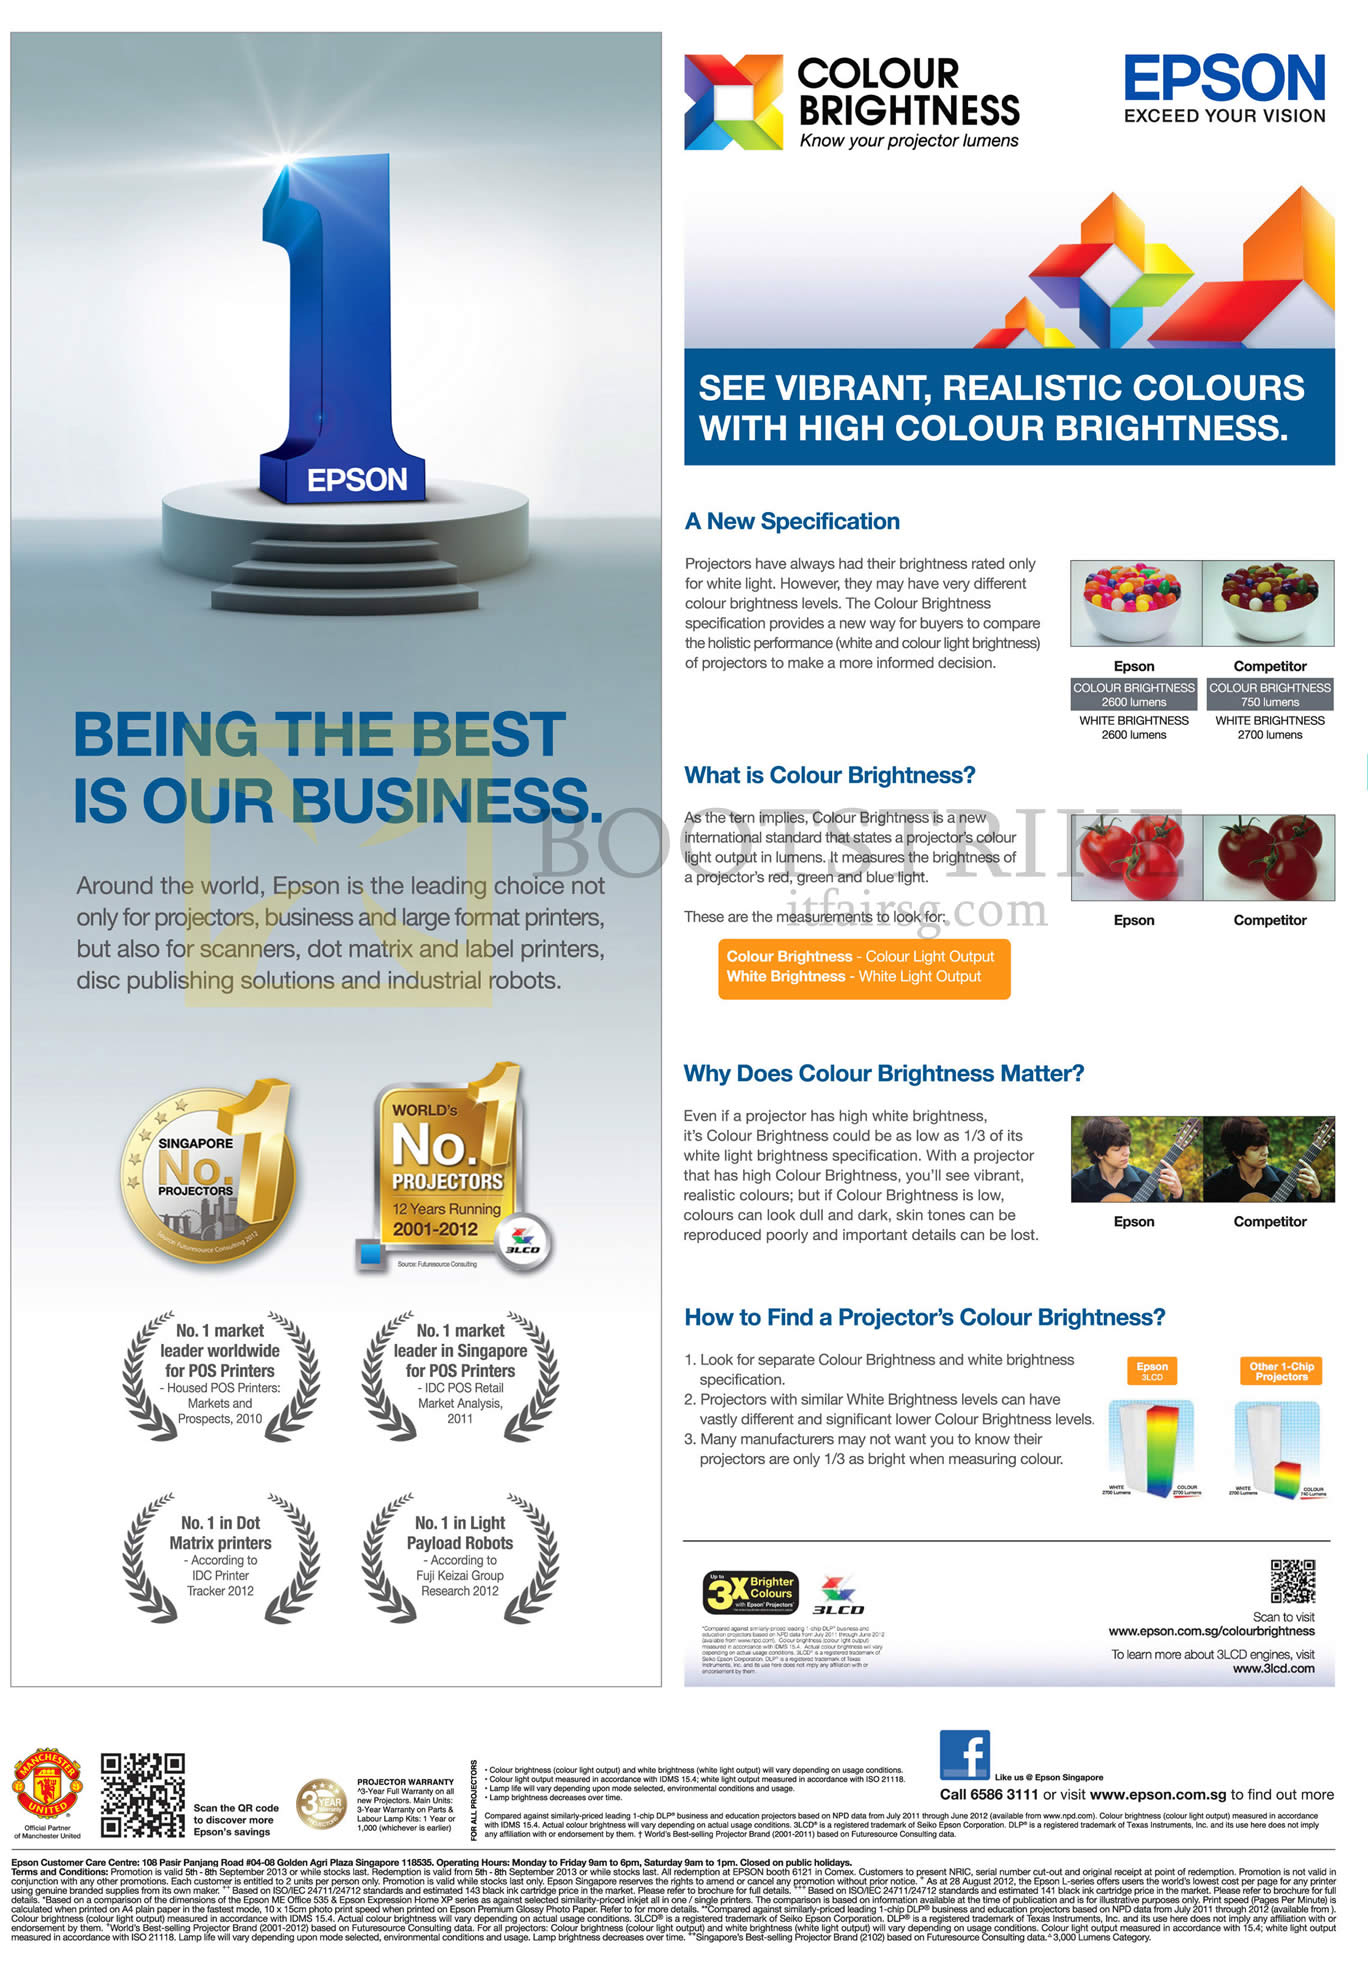 COMEX 2013 price list image brochure of Epson Printers Colour Brightness, Projectors